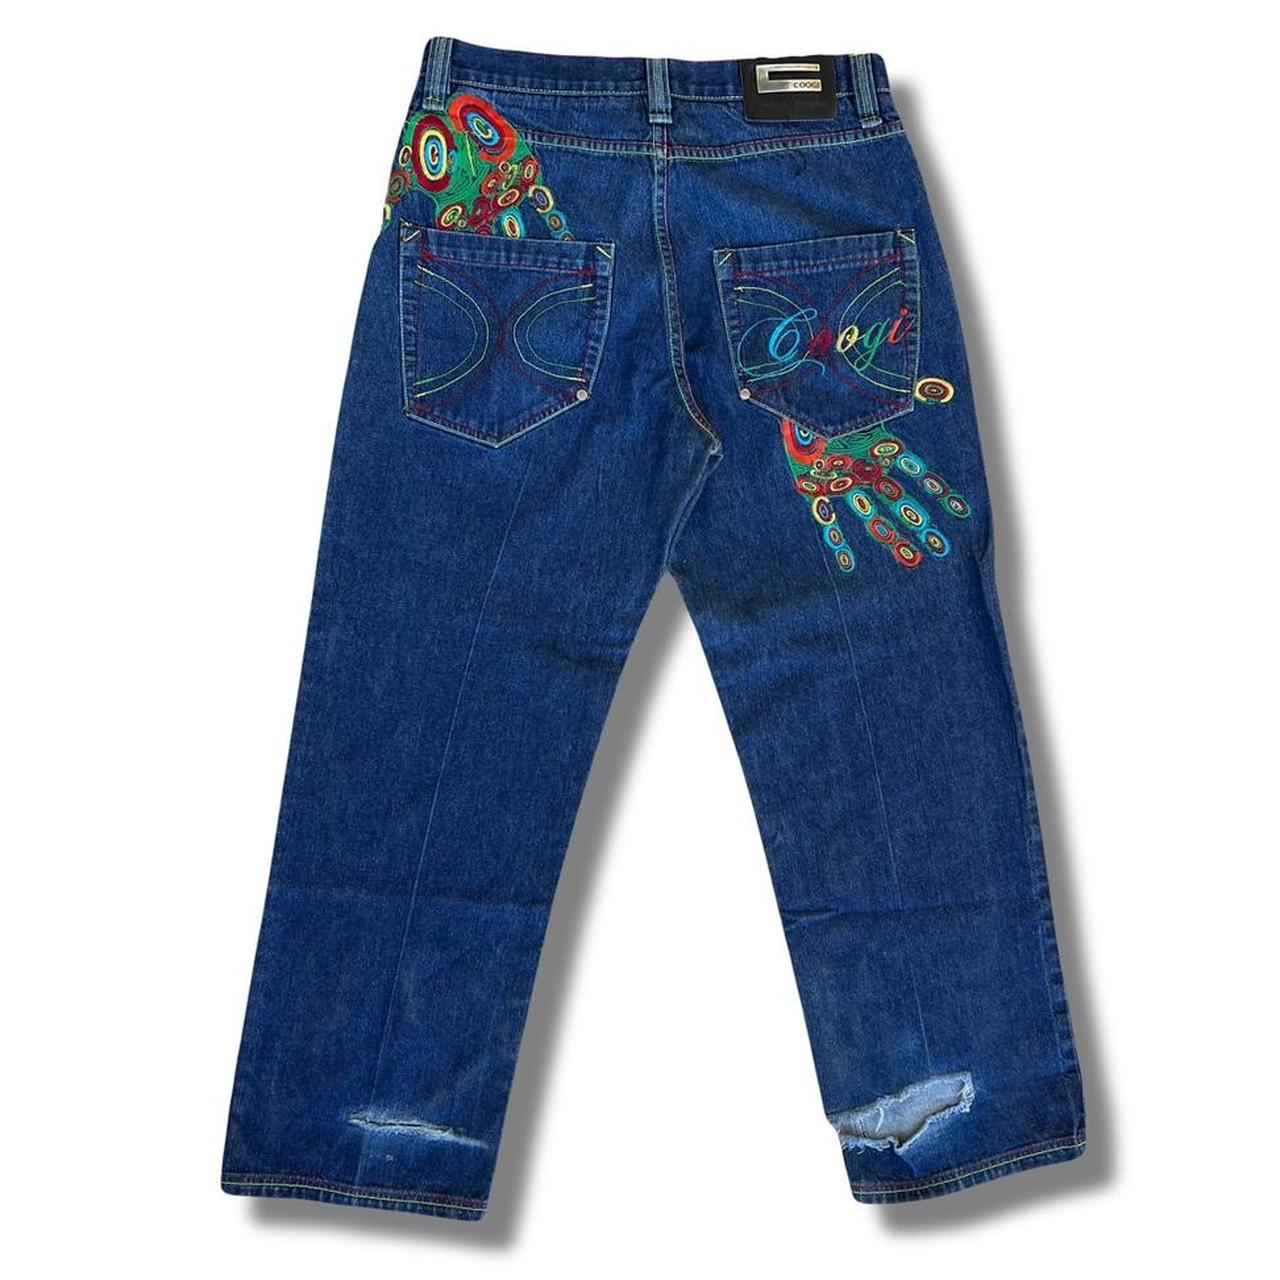 Coogi Men's Jeans (3)